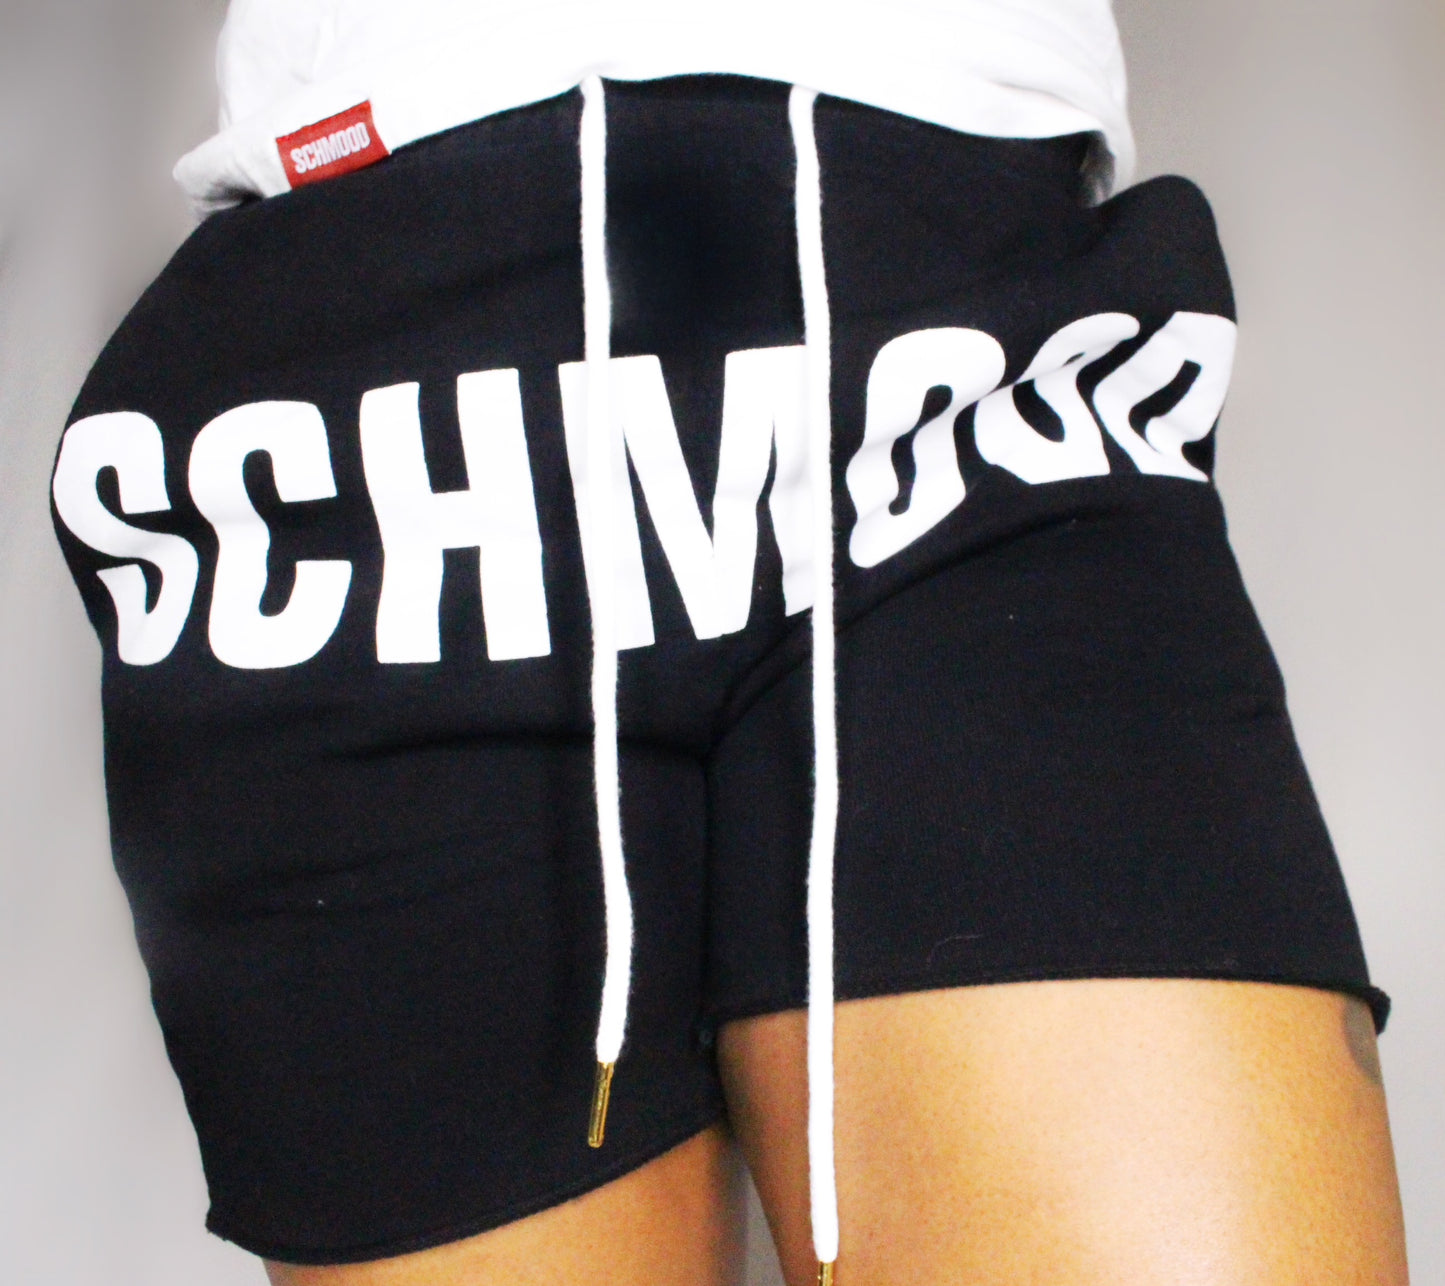 SCHMOOD Sweat Shorts - Black/White